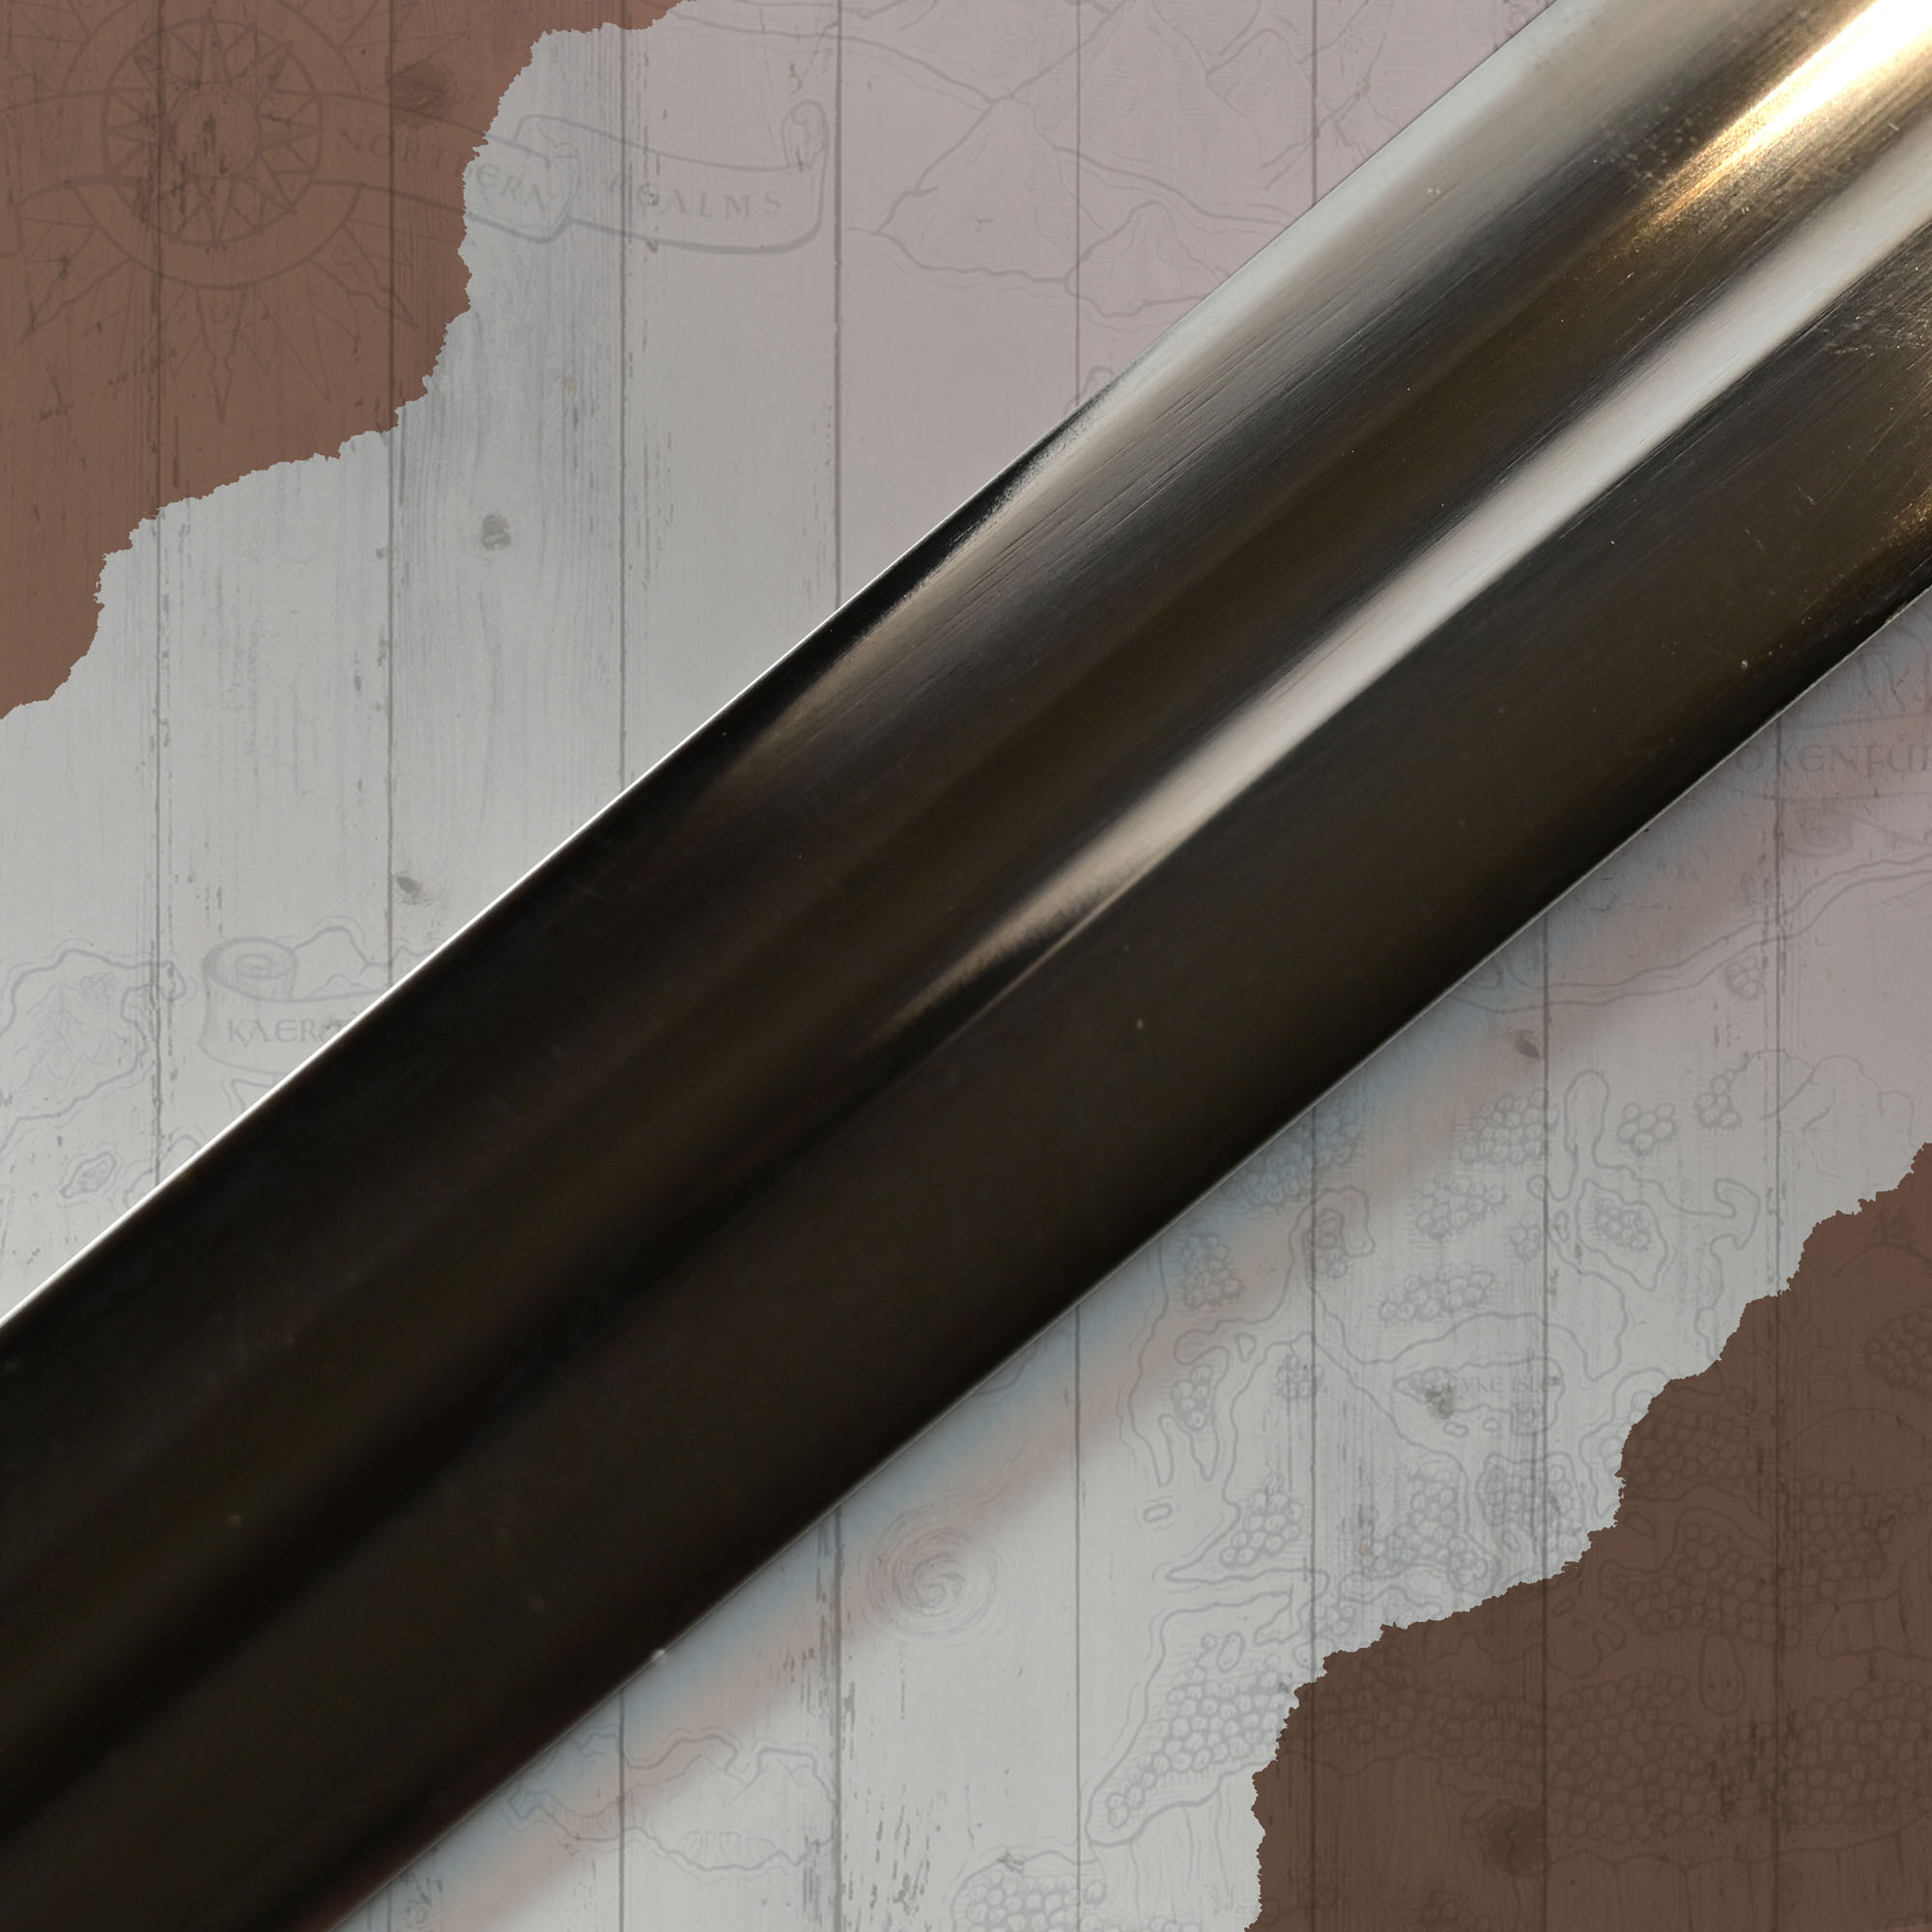 Witcher - steel sword with scabbard, Netflix version